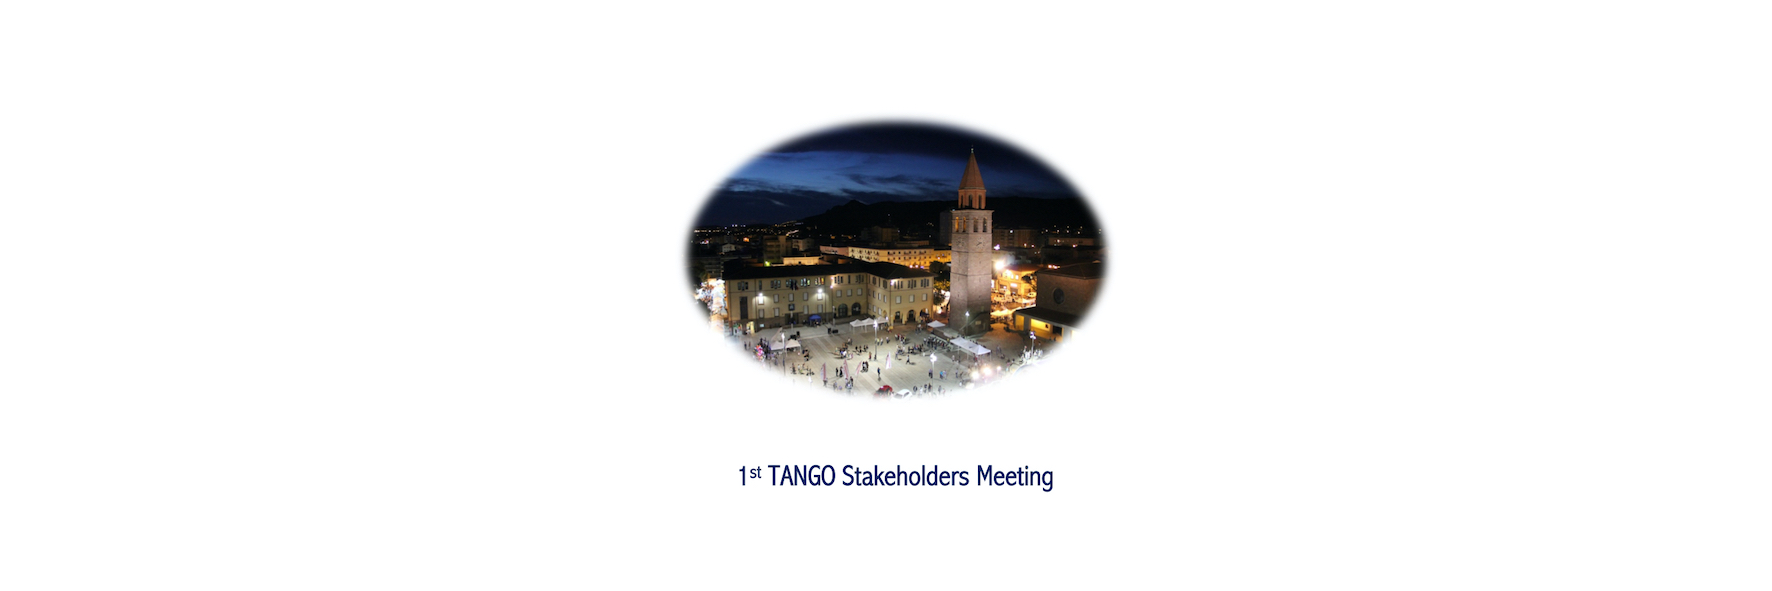 1st TANGO Stakeholders Meeting